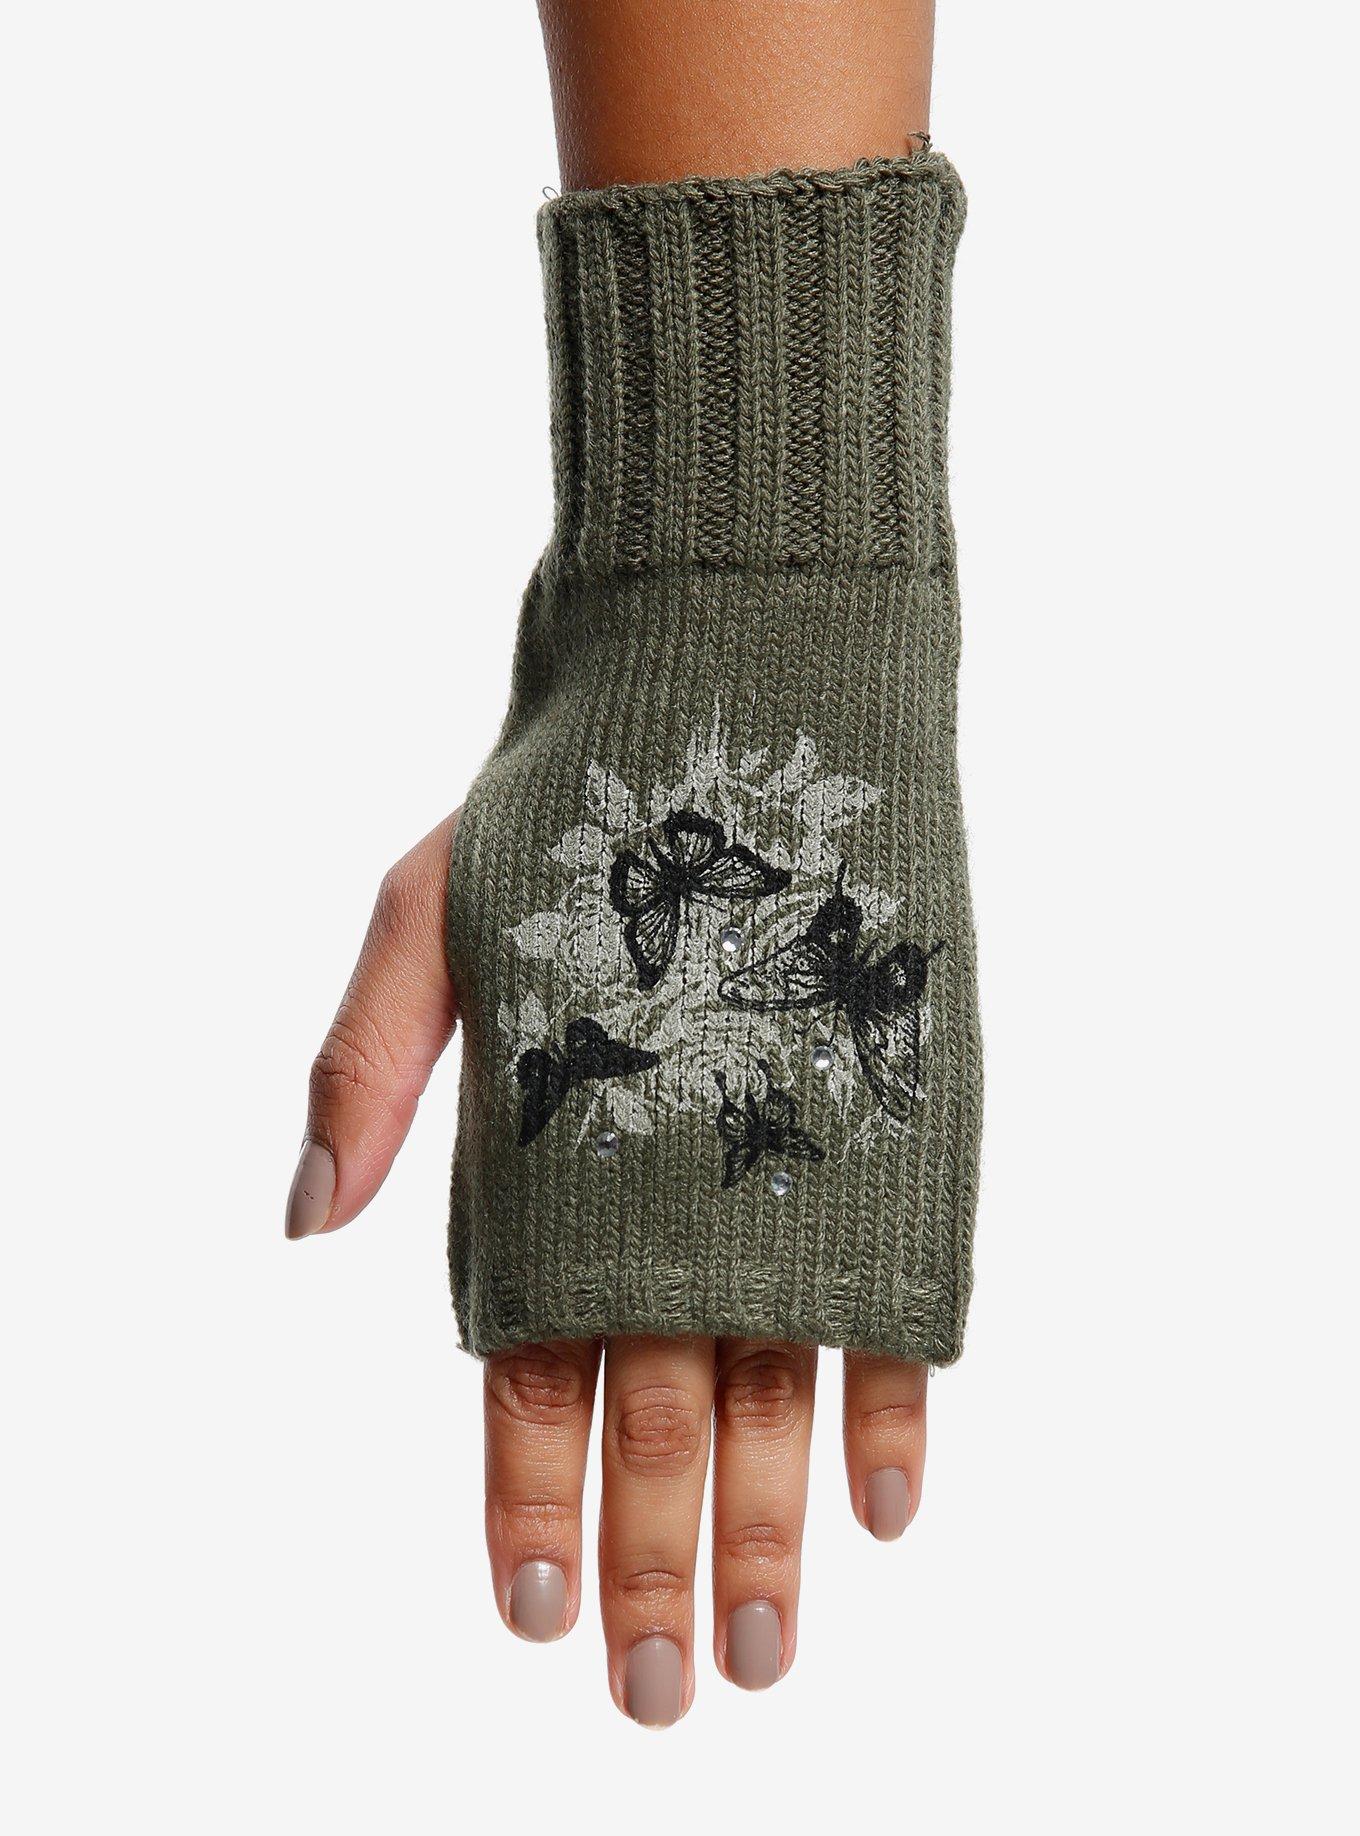 Green Butterfly Fingerless Gloves